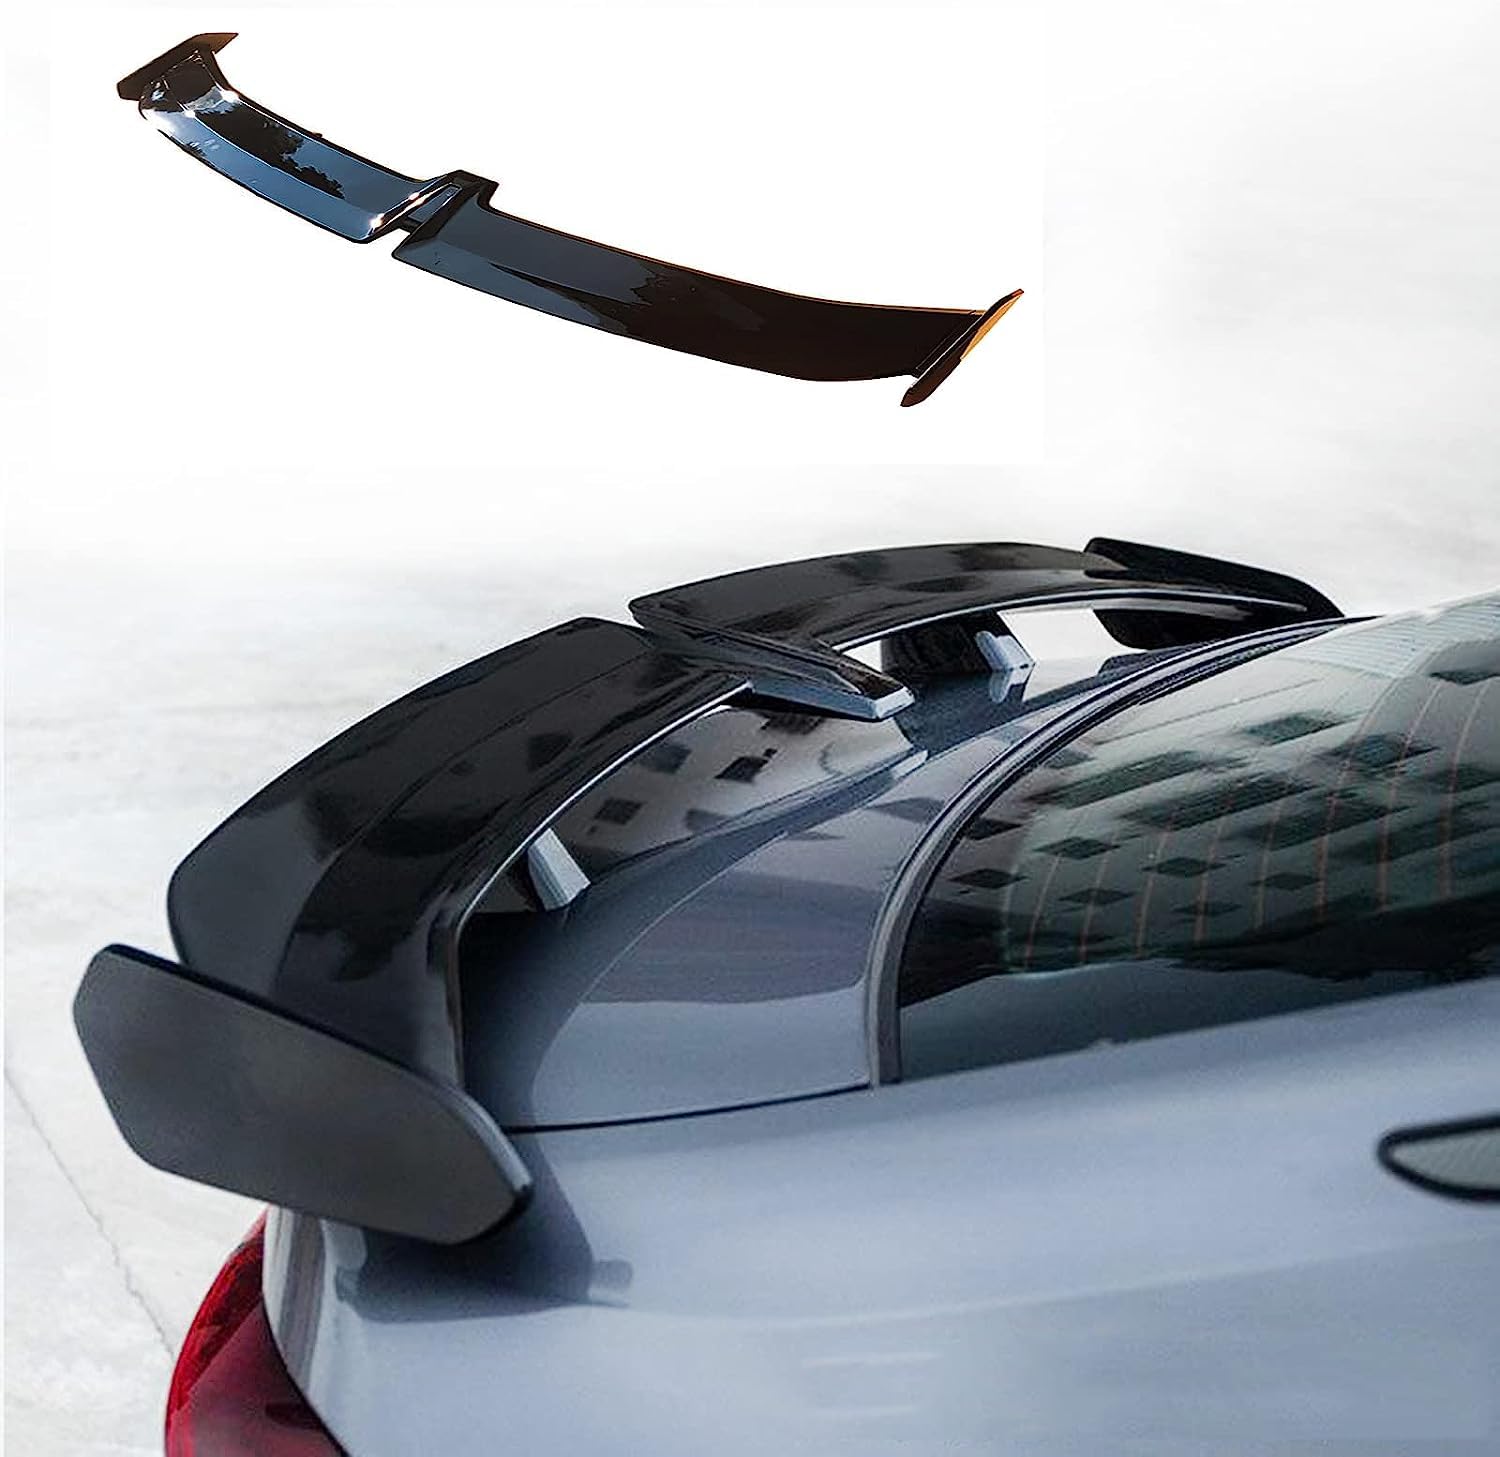 Heckflügel fester Winds poiler Heckflügel modifiziertes zubehör für Peugeot 207 CC (WD) Coupé Cabrio 2007 2008 2009 2010 2011-2015,hinten Kofferraum flügel,A-Gloss Black von LeLeD